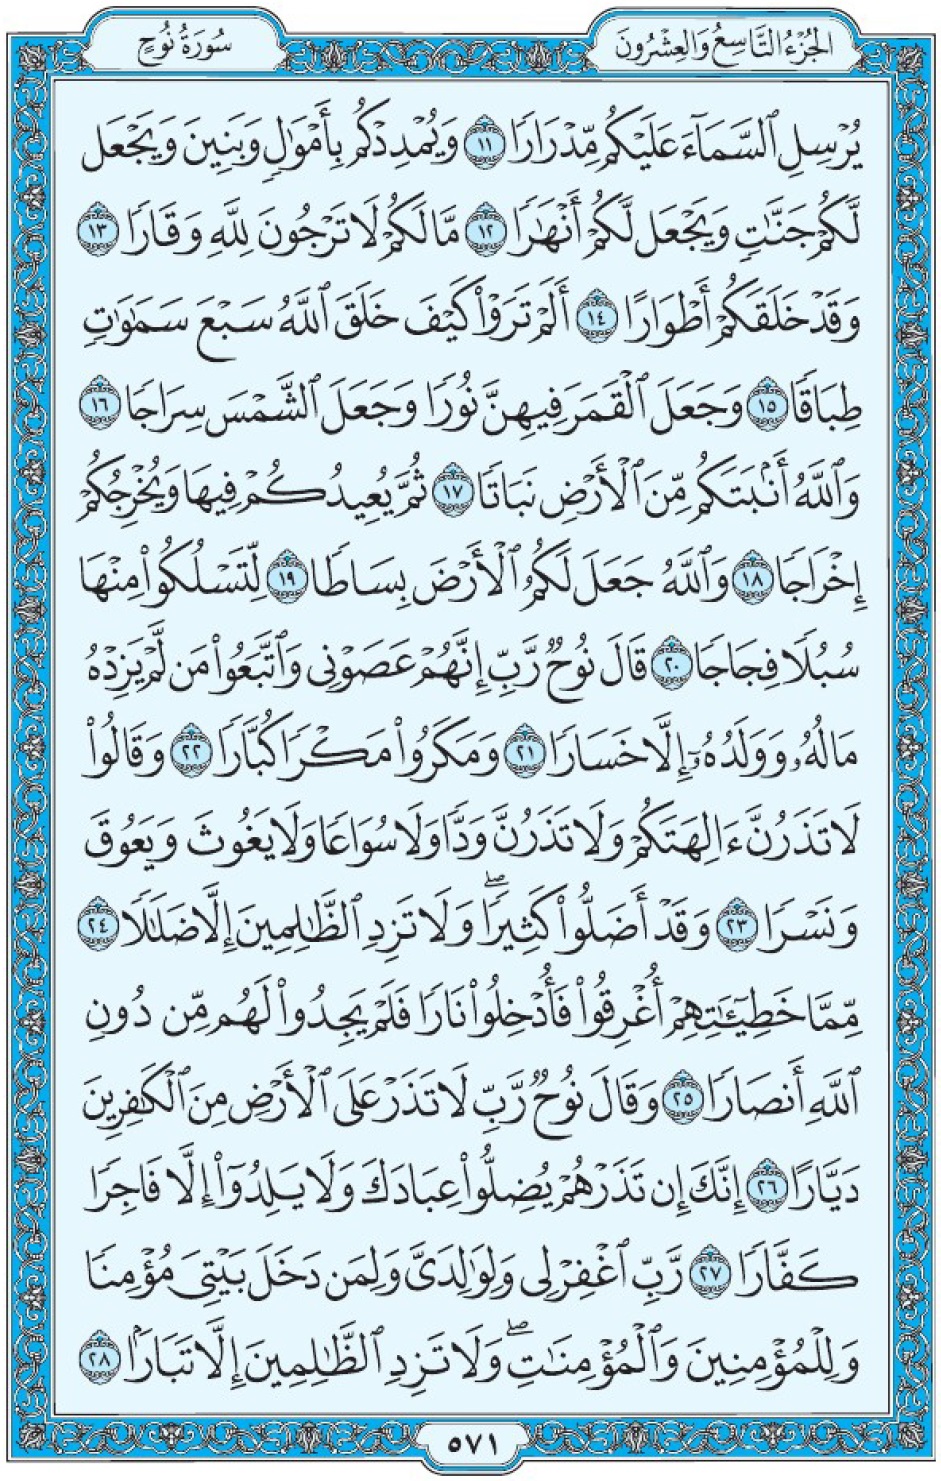 Коран Мединский мусхаф страница 571, сура Нух, аят 11-28